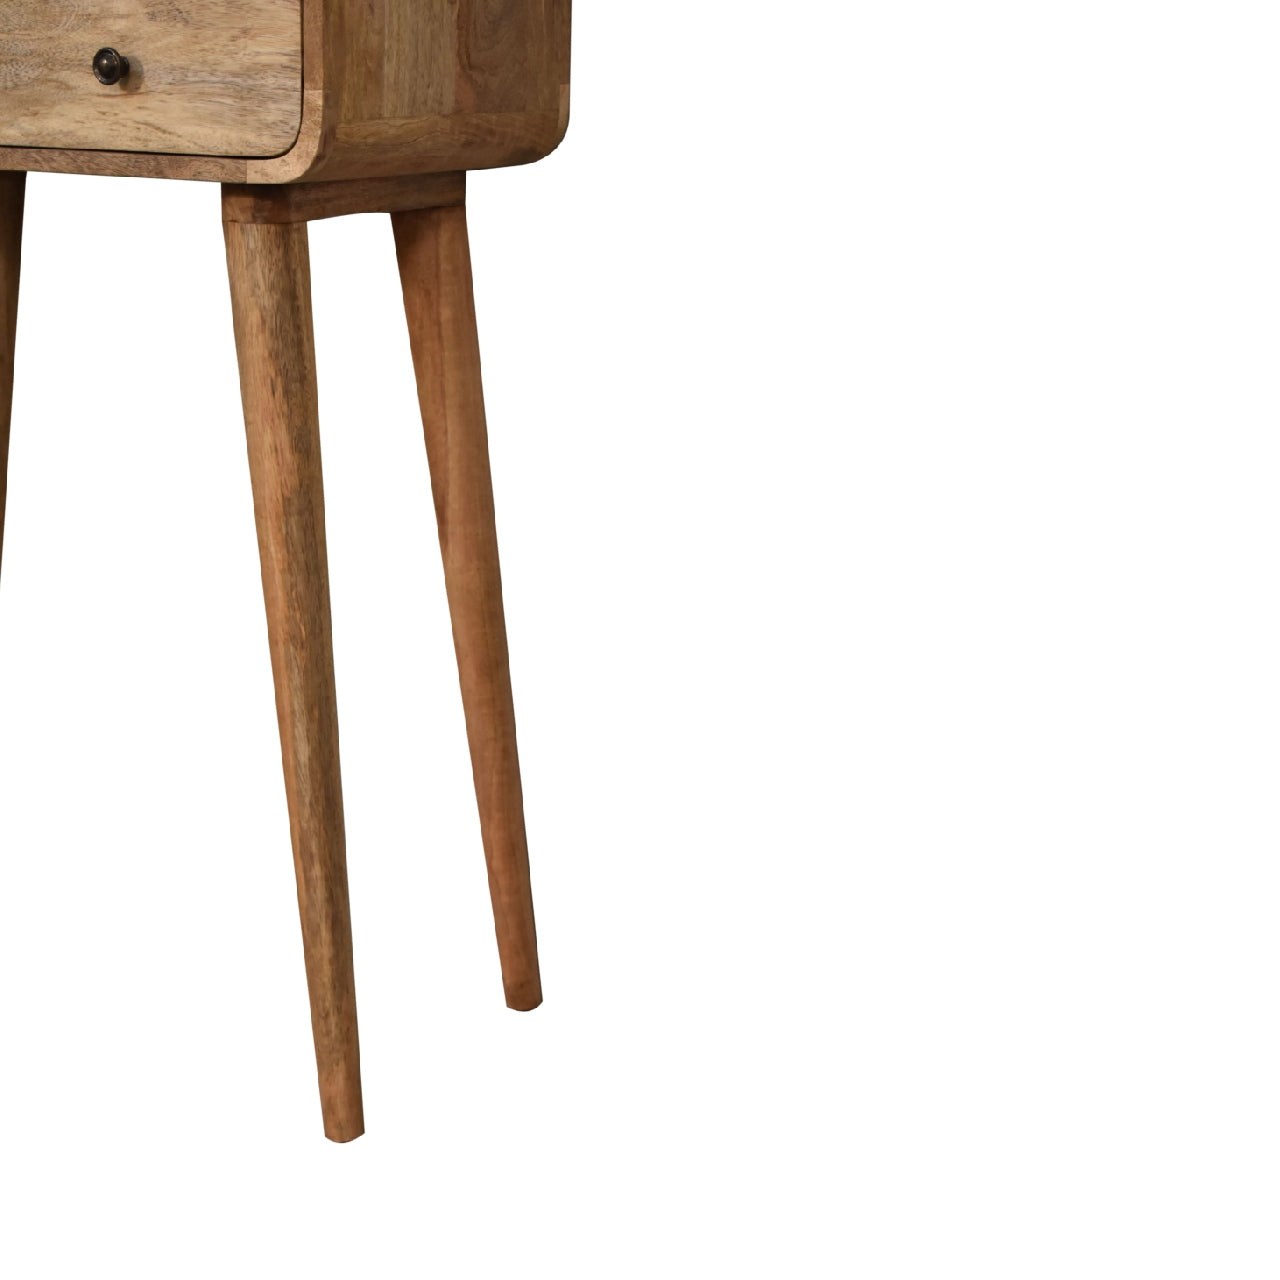 Modal Handmade Solid Wood 2 Drawer Small Console Table in Oak-ish finish | malletandplane.com